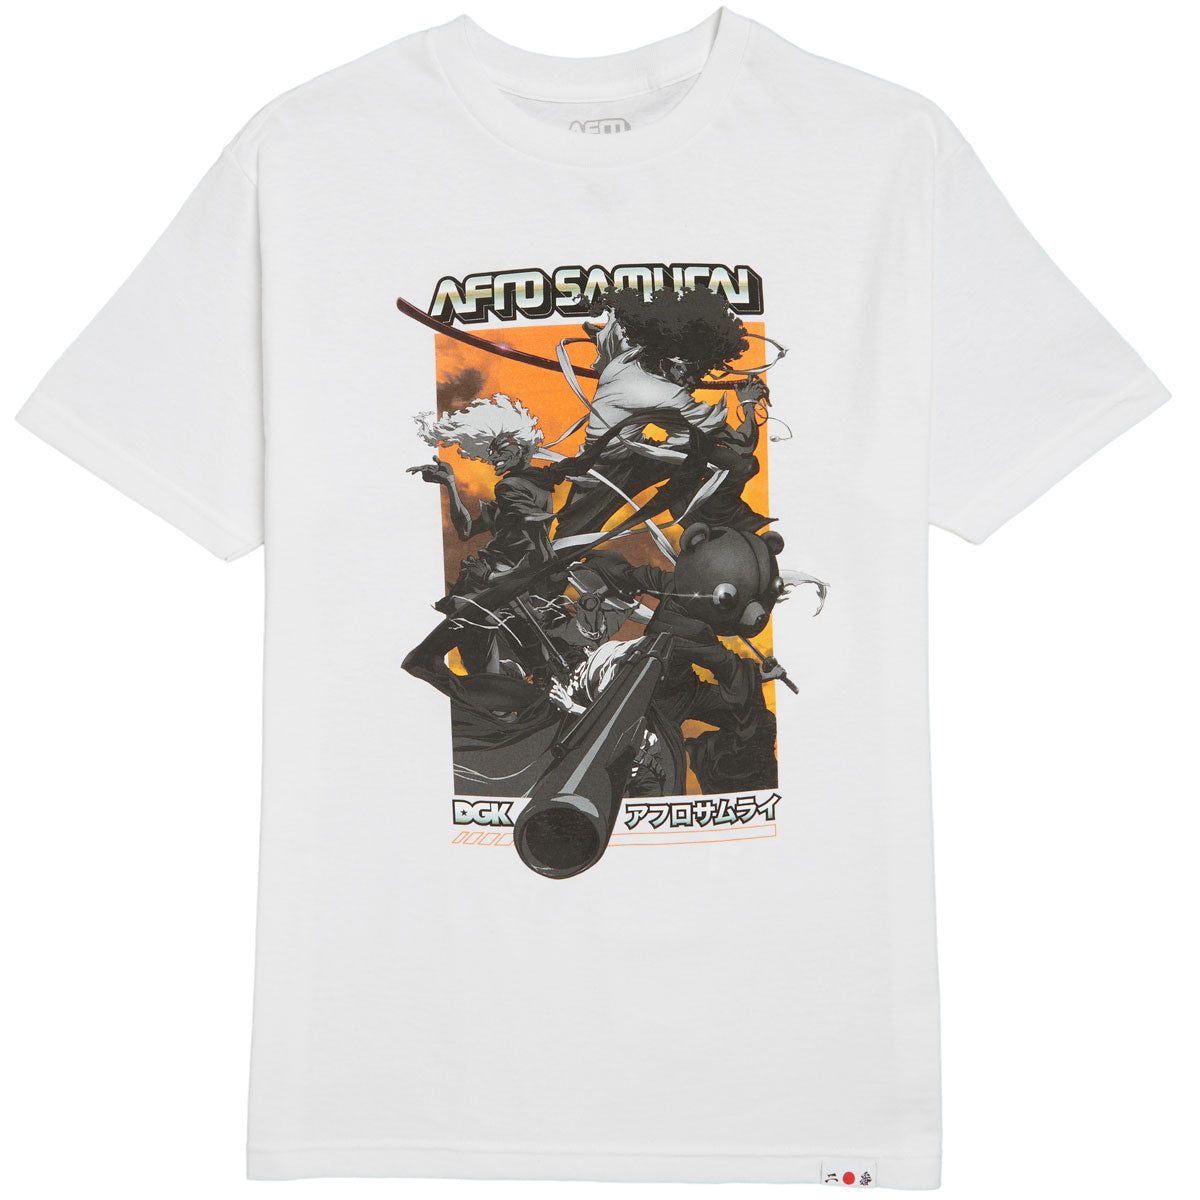 DGK x Afro Samurai Collage T-Shirt - White image 1